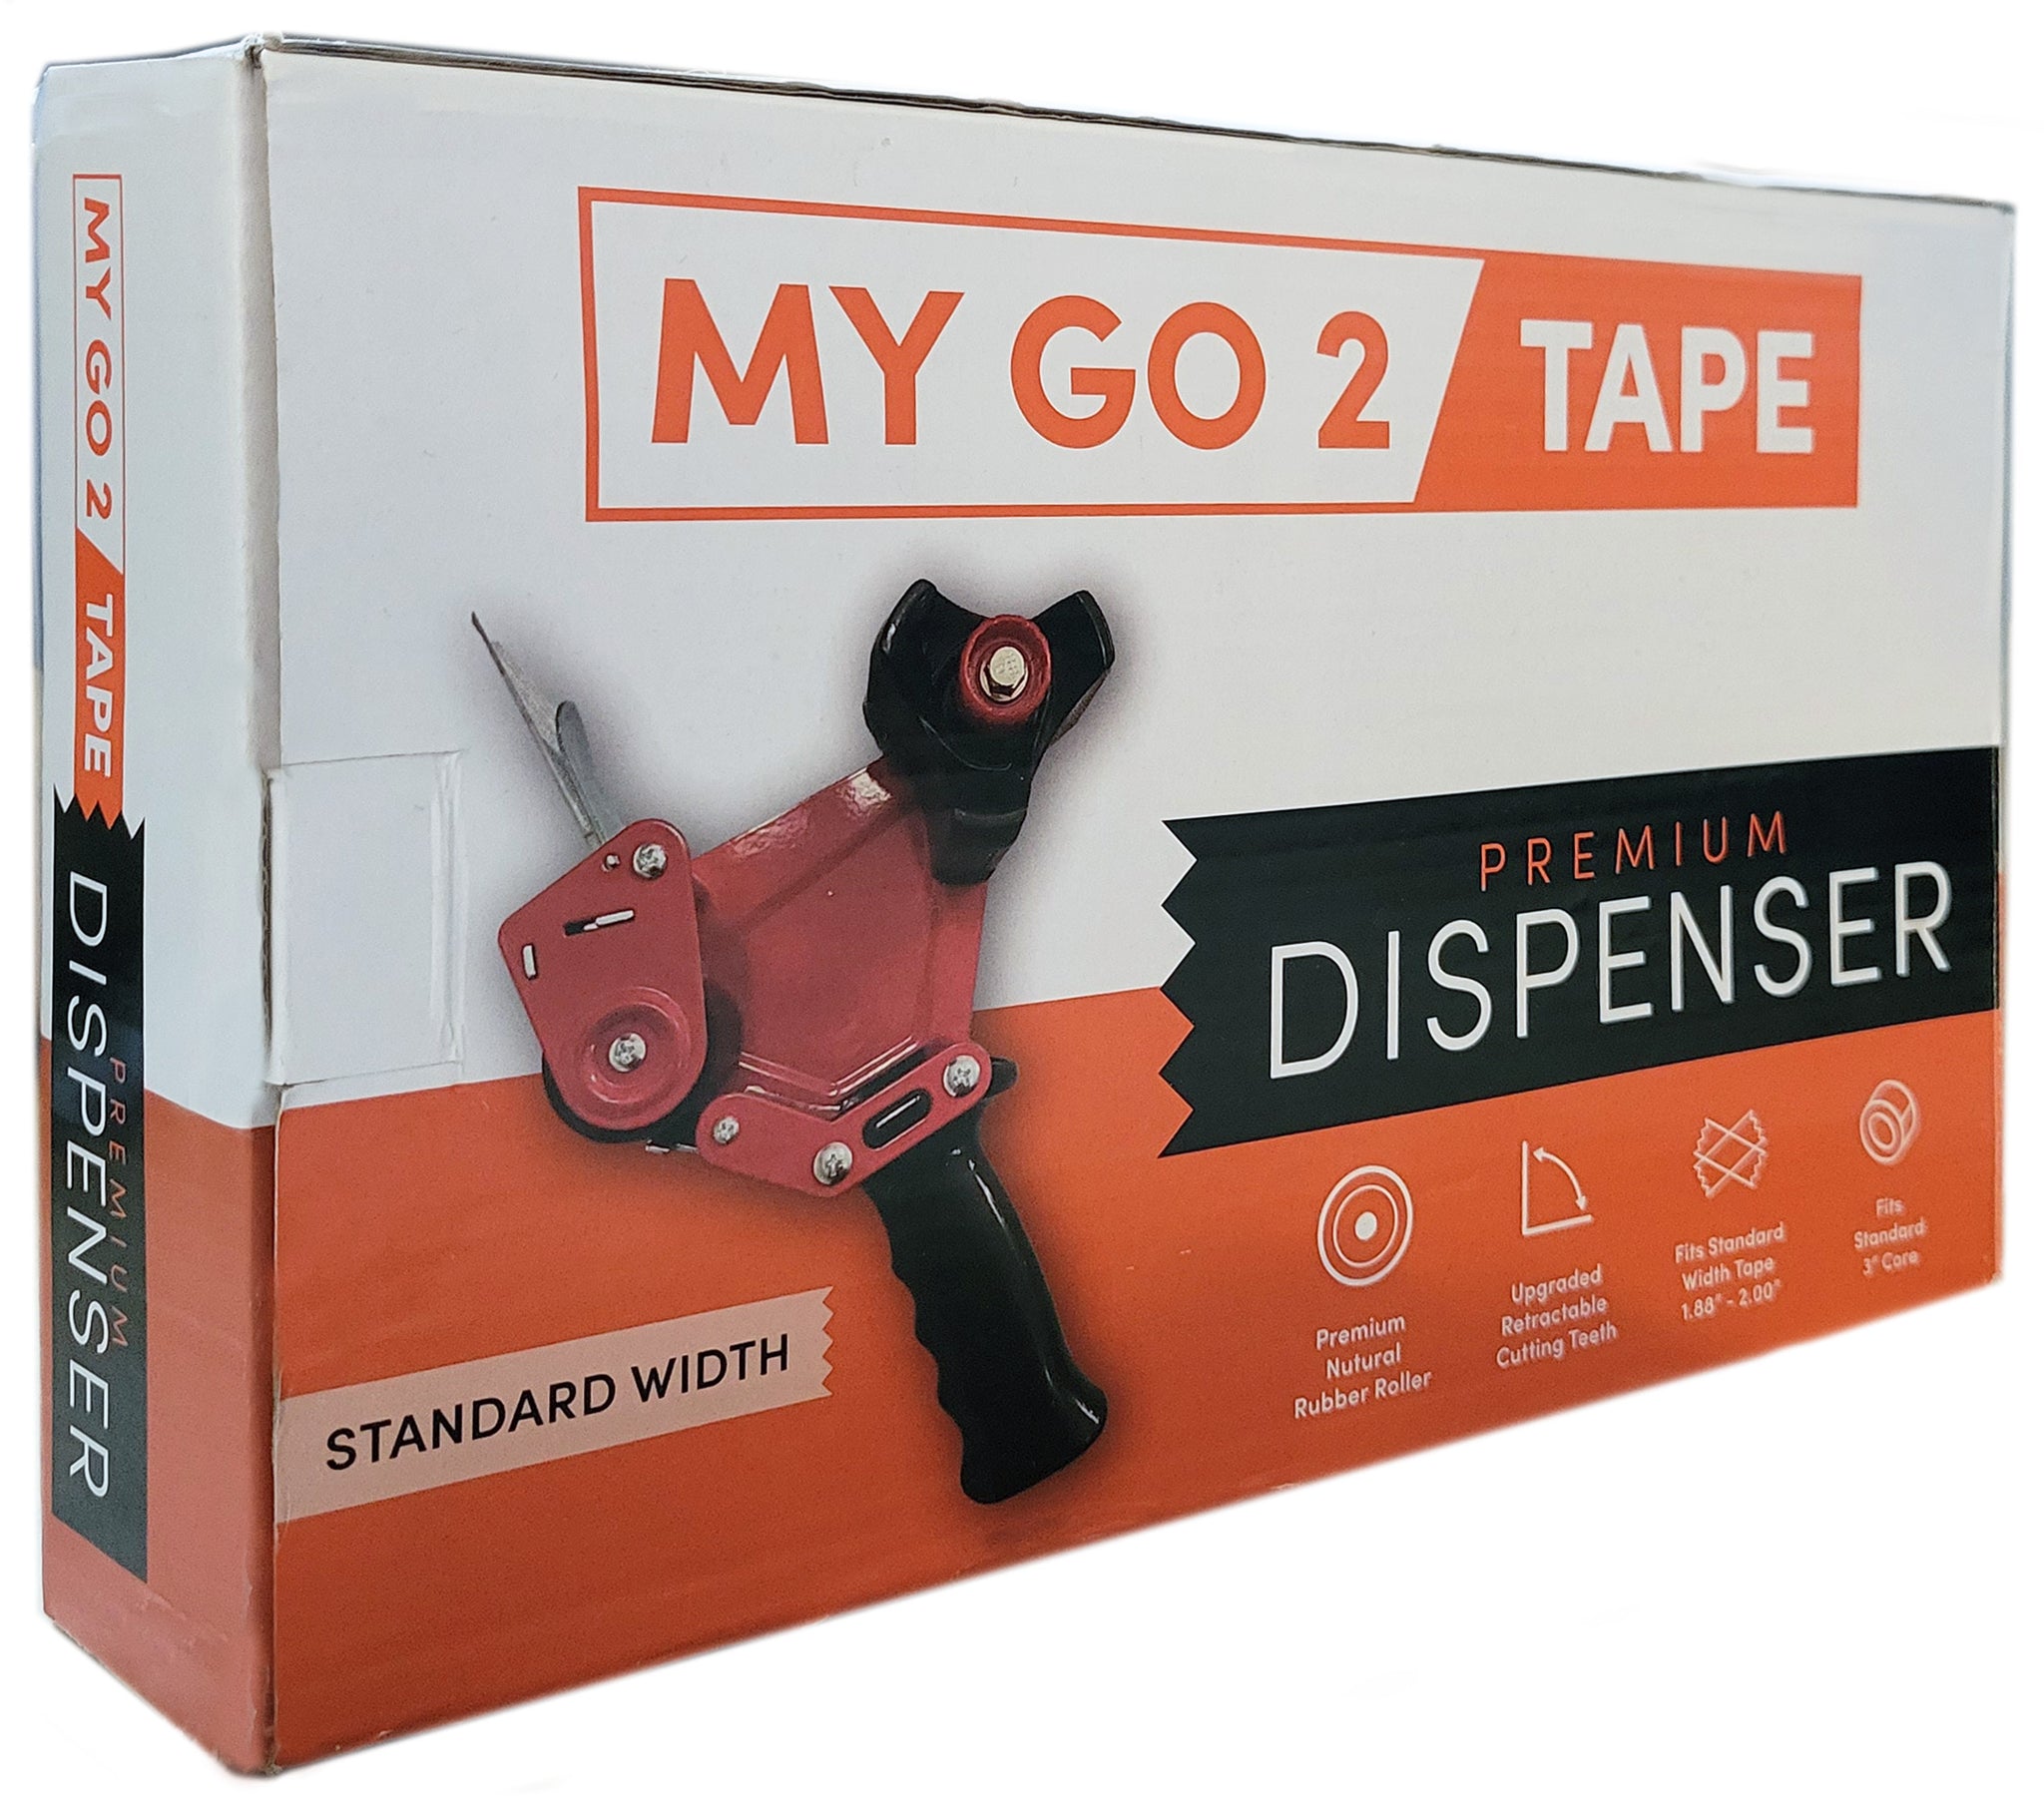 My Go 2 - Industrial Packing Tape Dispenser for Standard width tape